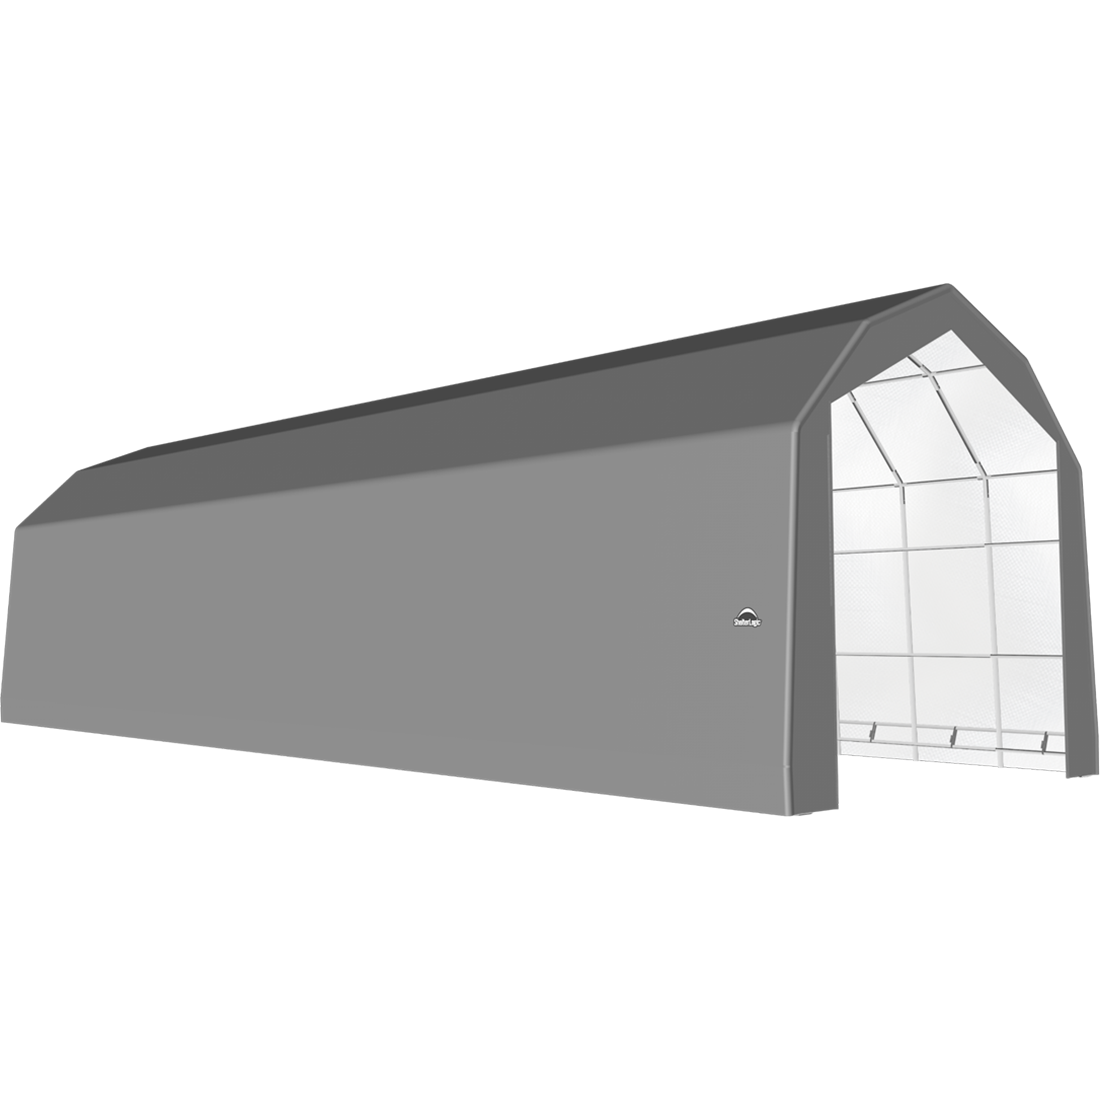 ShelterTech SP Series Barn Shelter, 20 ft. x 68 ft. x 18 ft. Heavy Duty PVC 14.5 oz. Gray